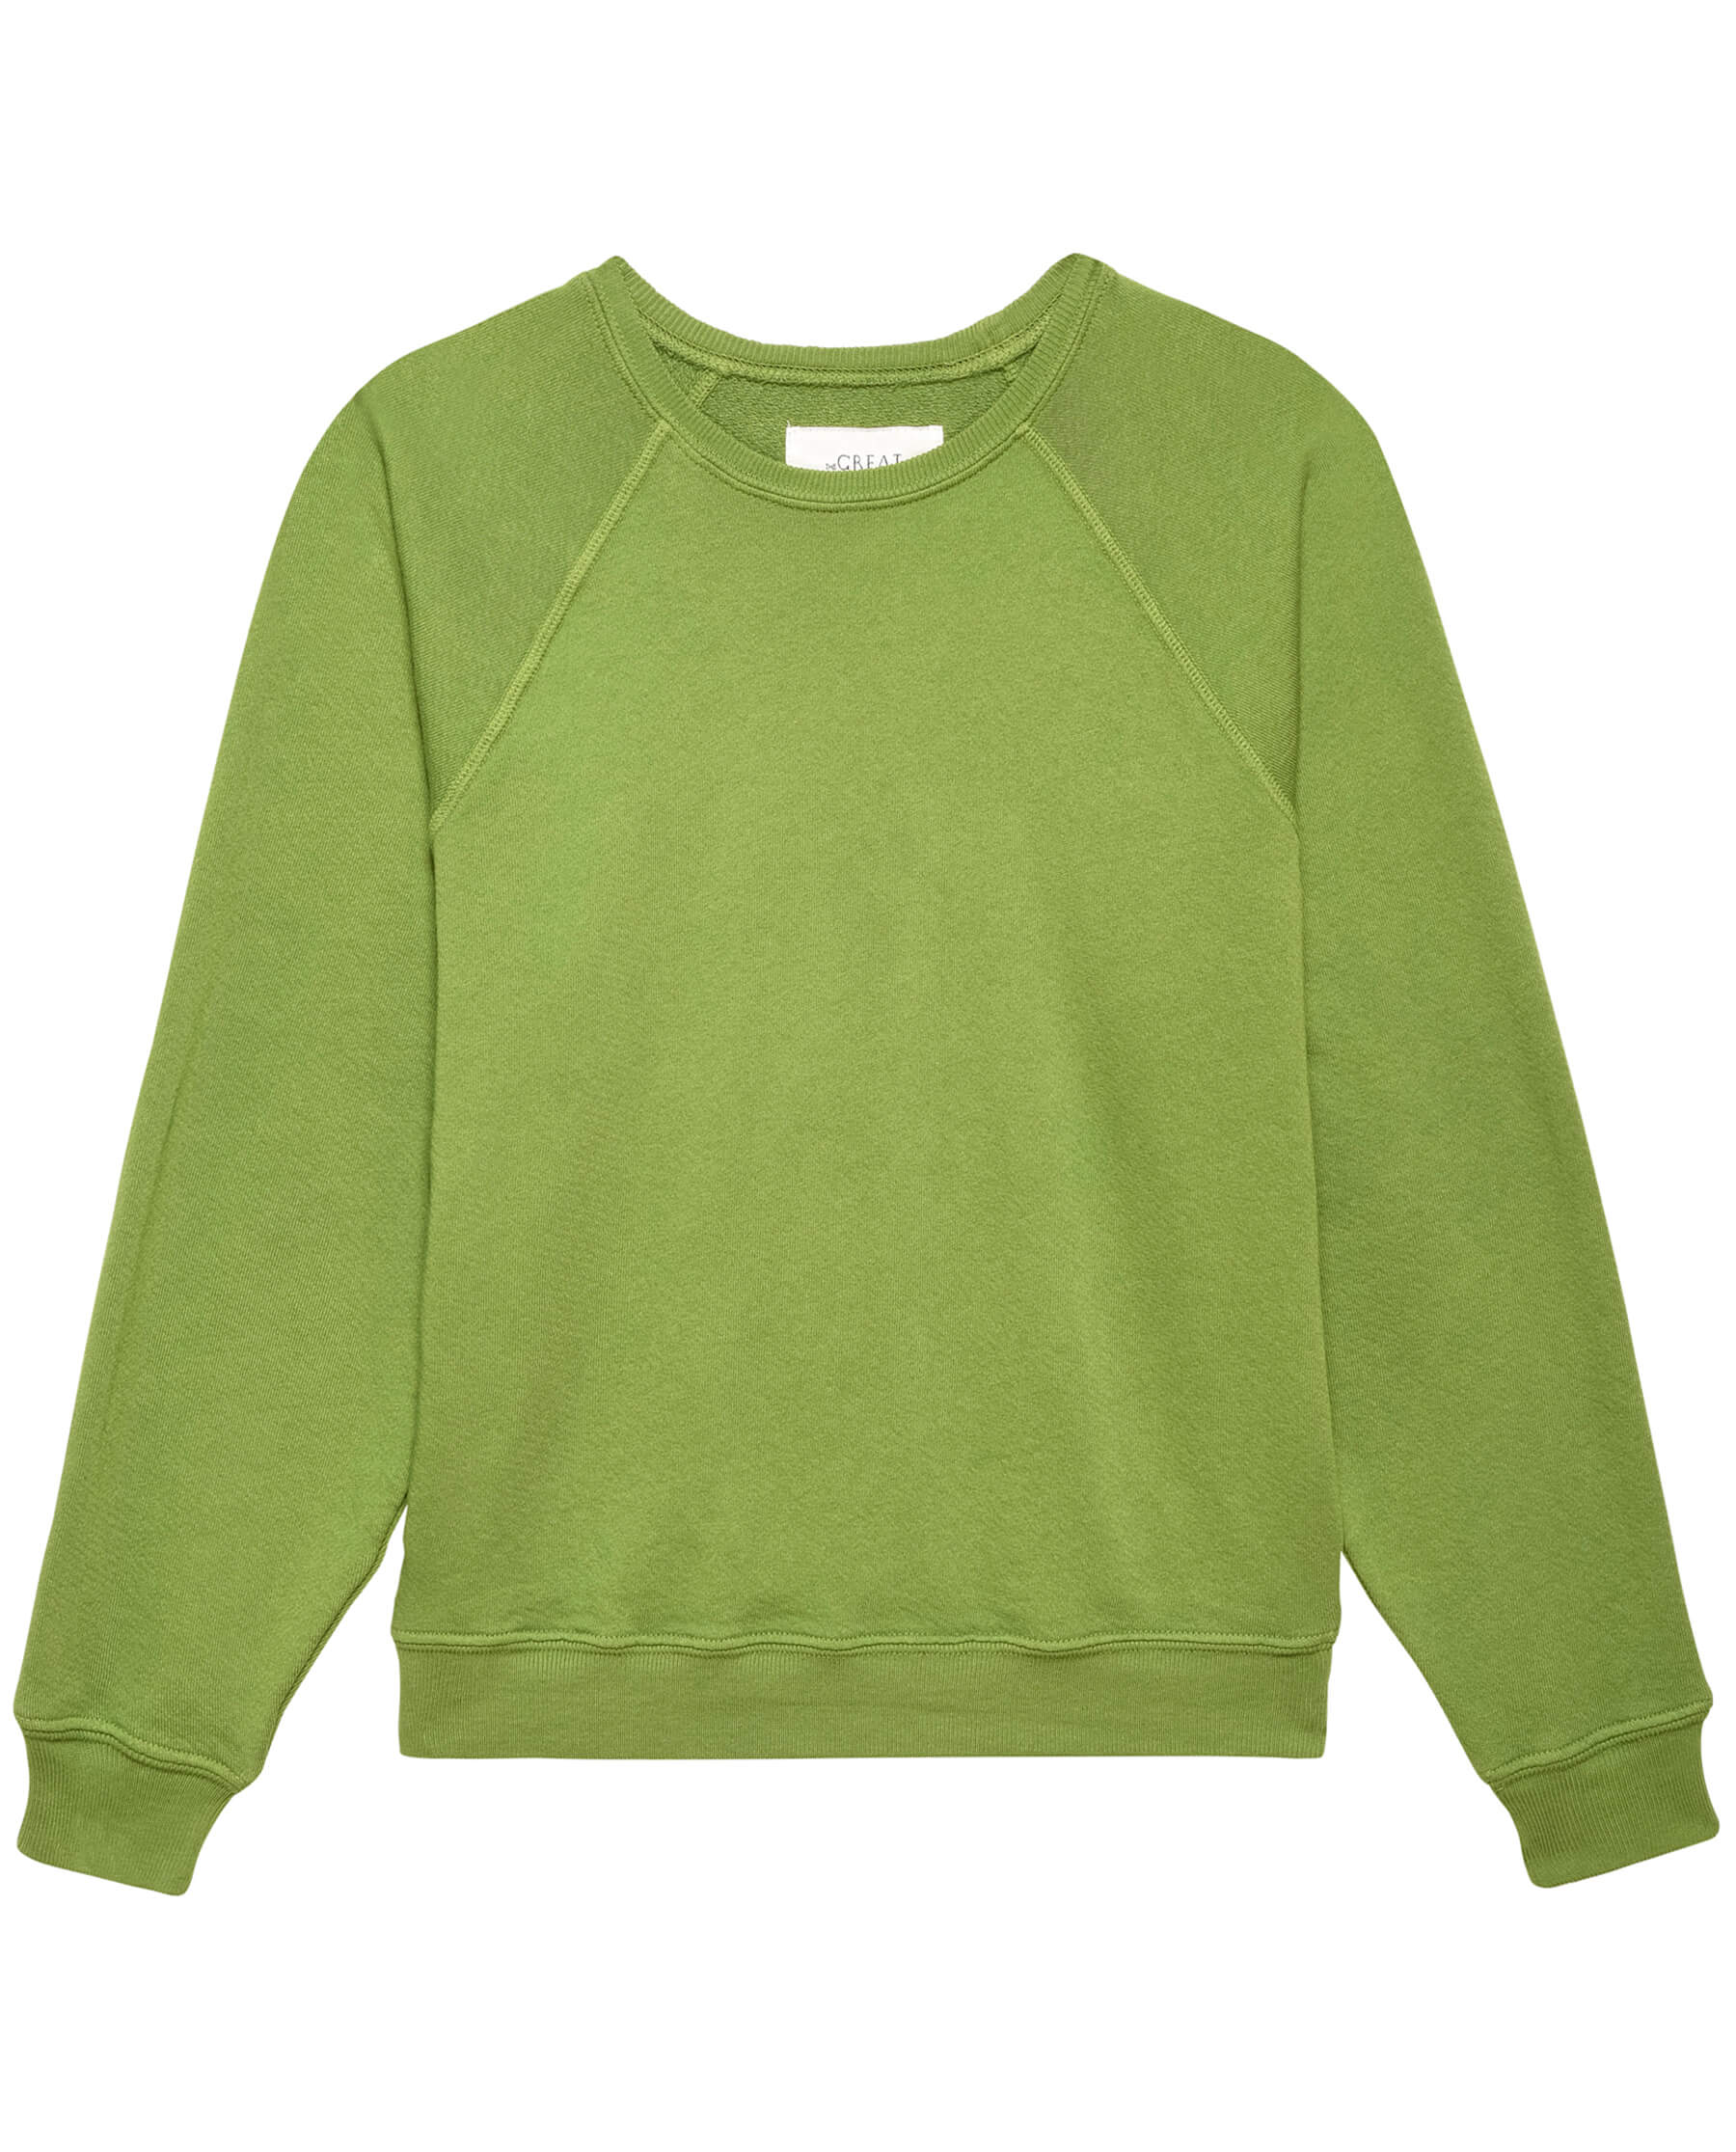 The Shrunken Sweatshirt. Solid -- Fern